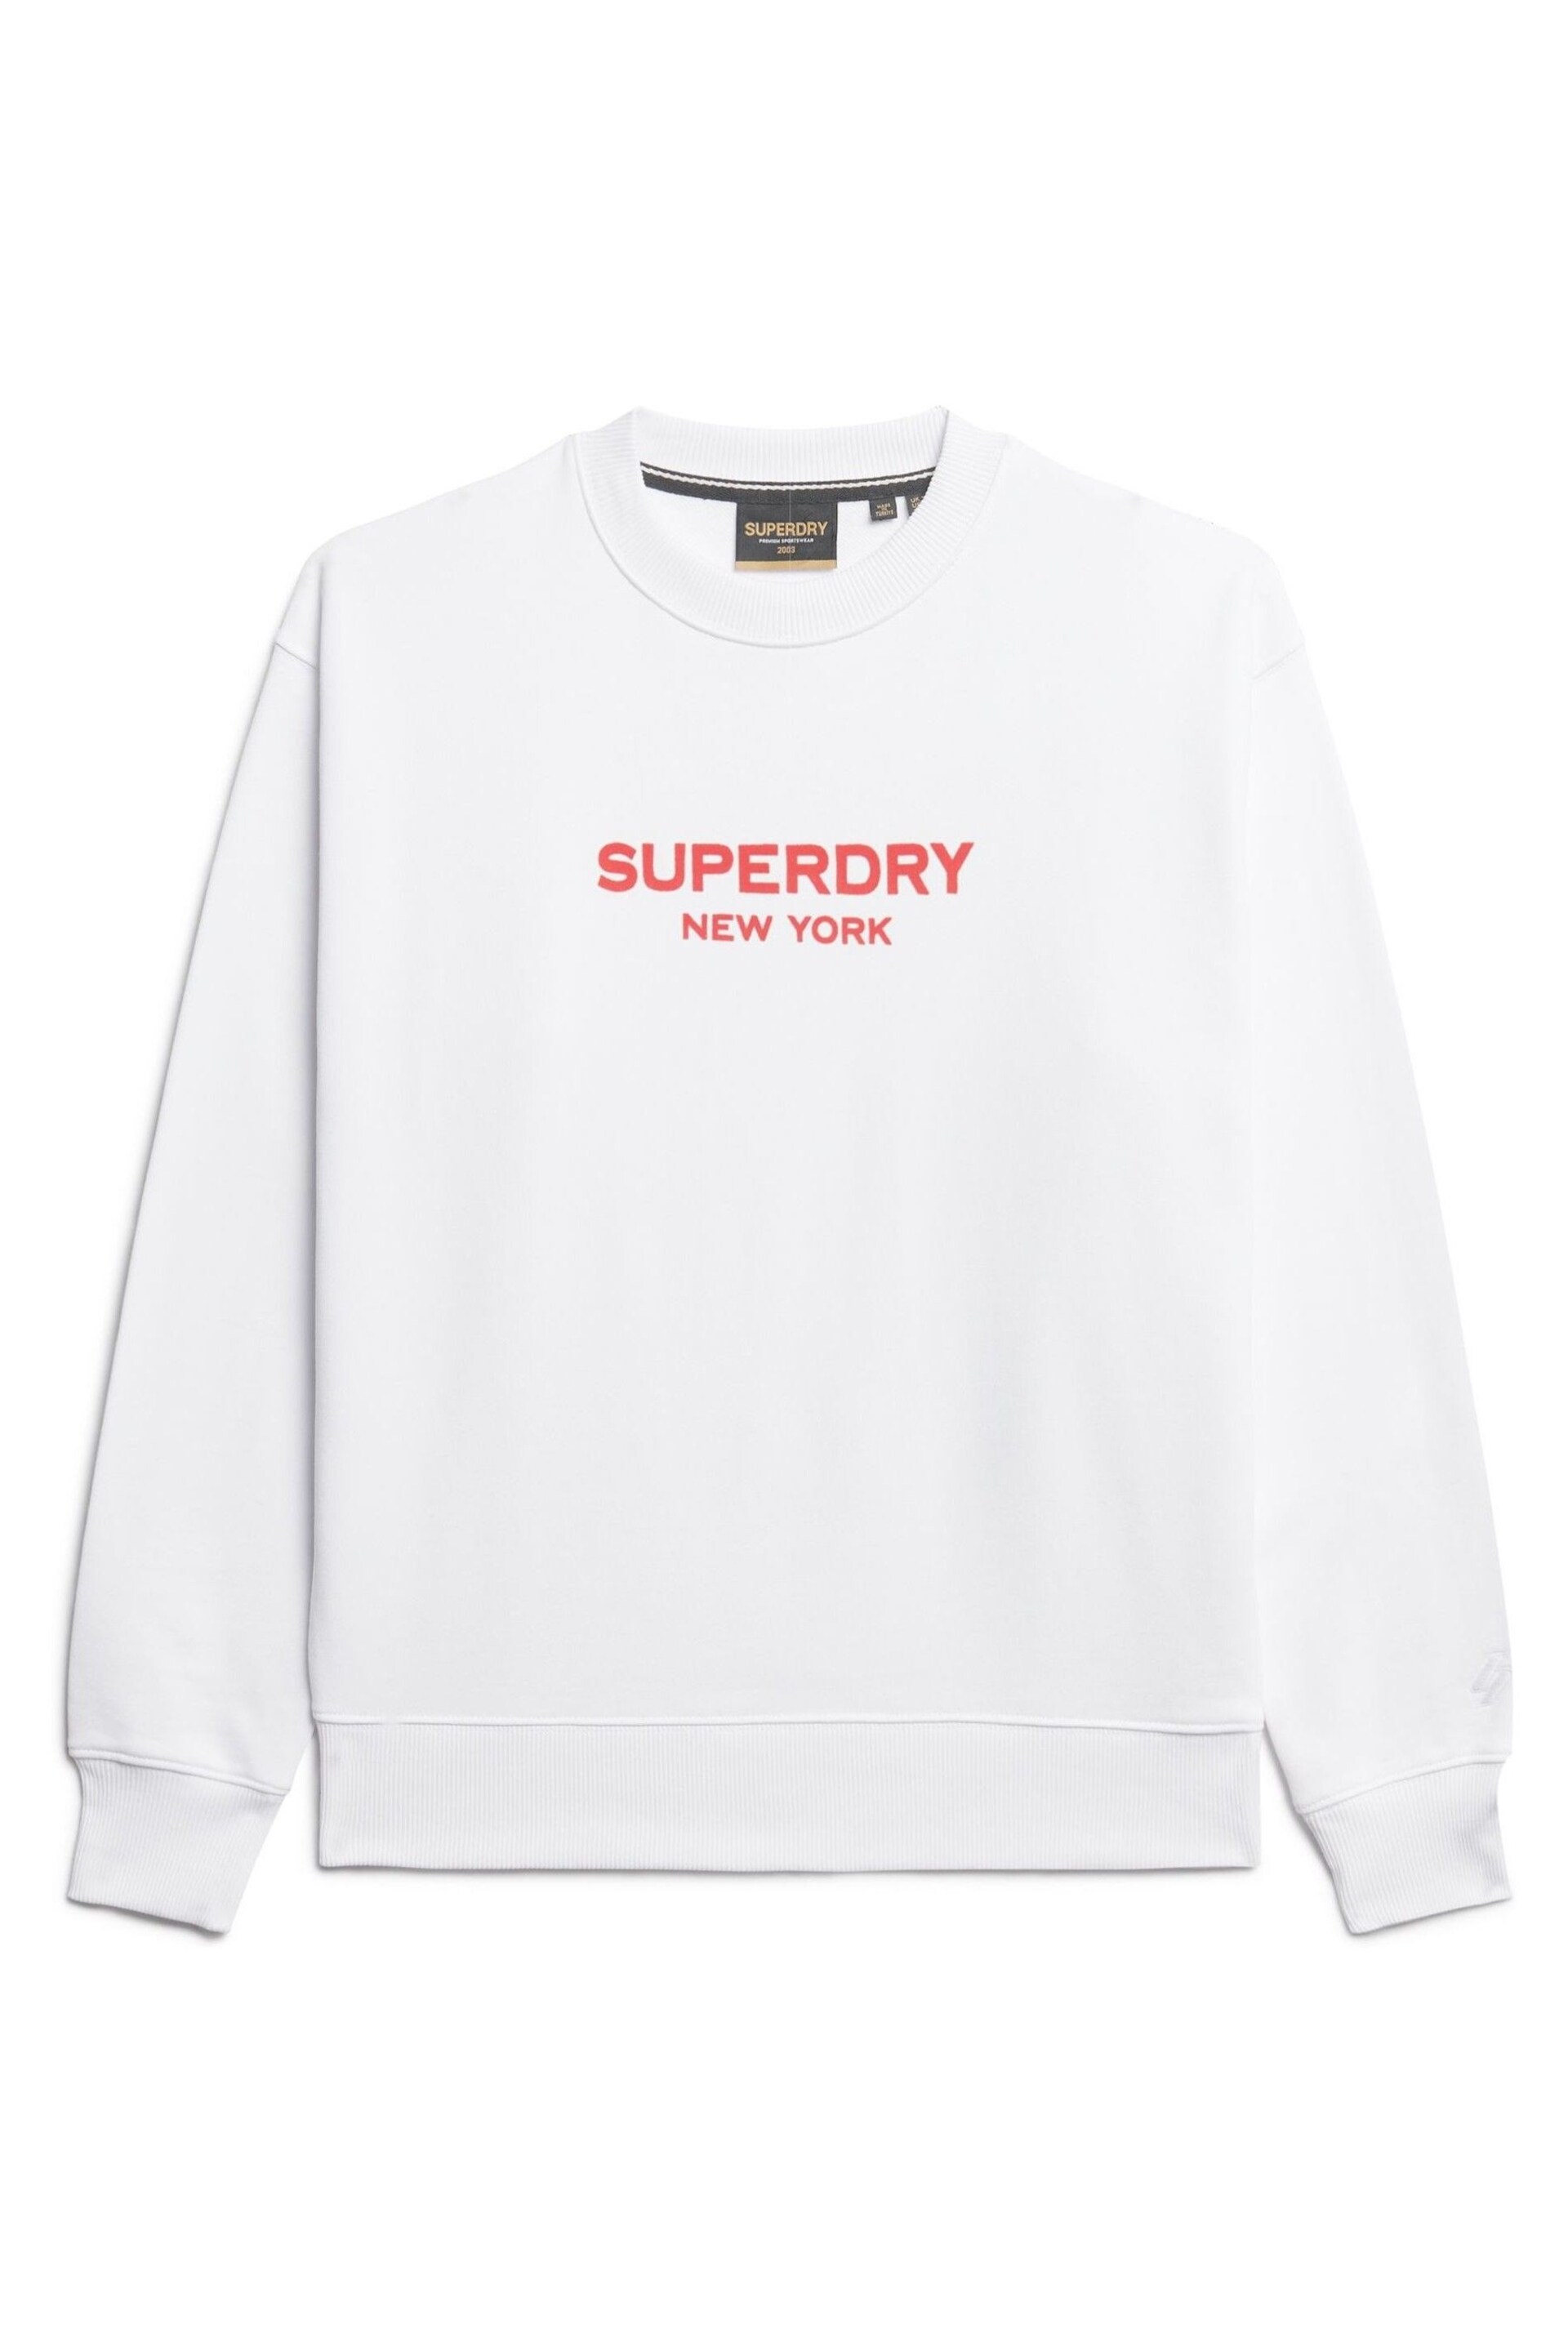 Superdry White Sport Luxe Crew Sweatshirt - Image 4 of 6